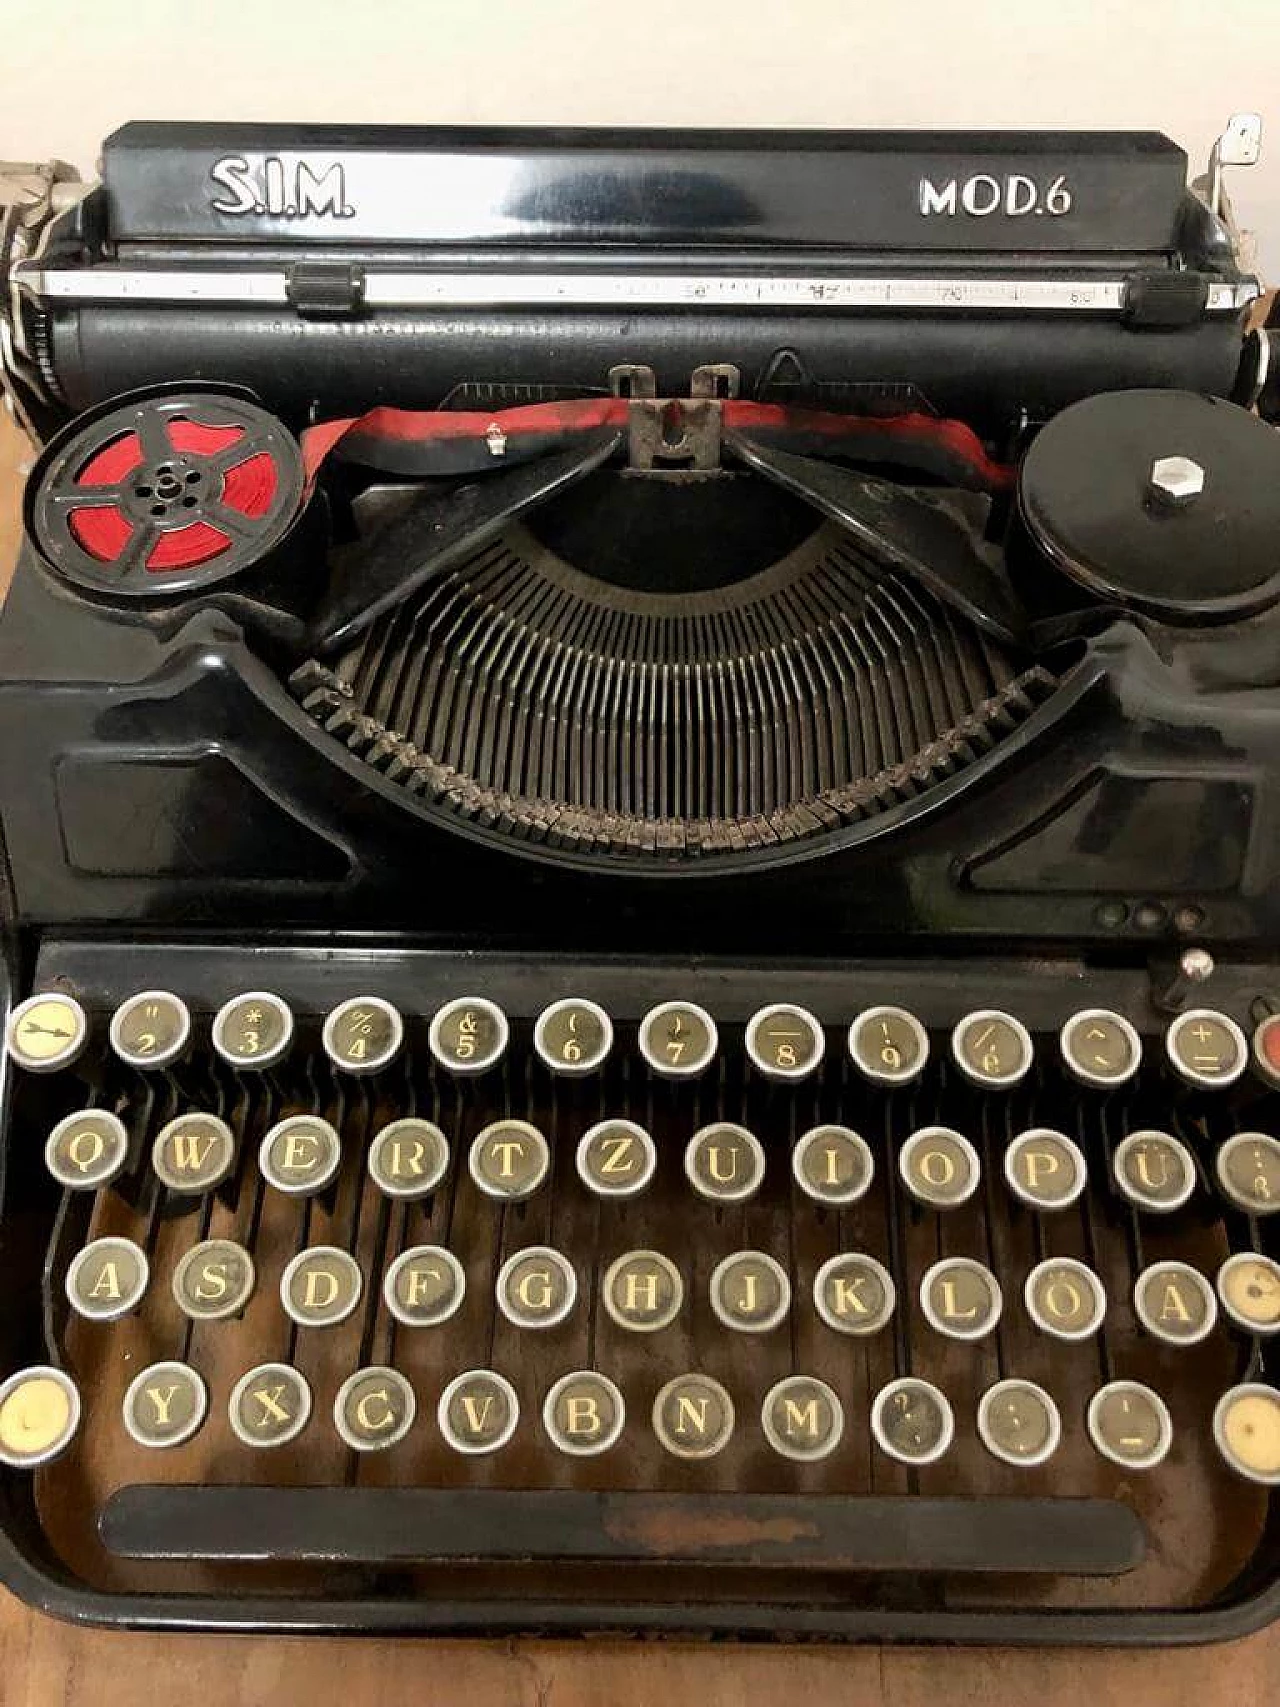 Typewriter by Giachero for S.I.M. model 6, 1930s 2